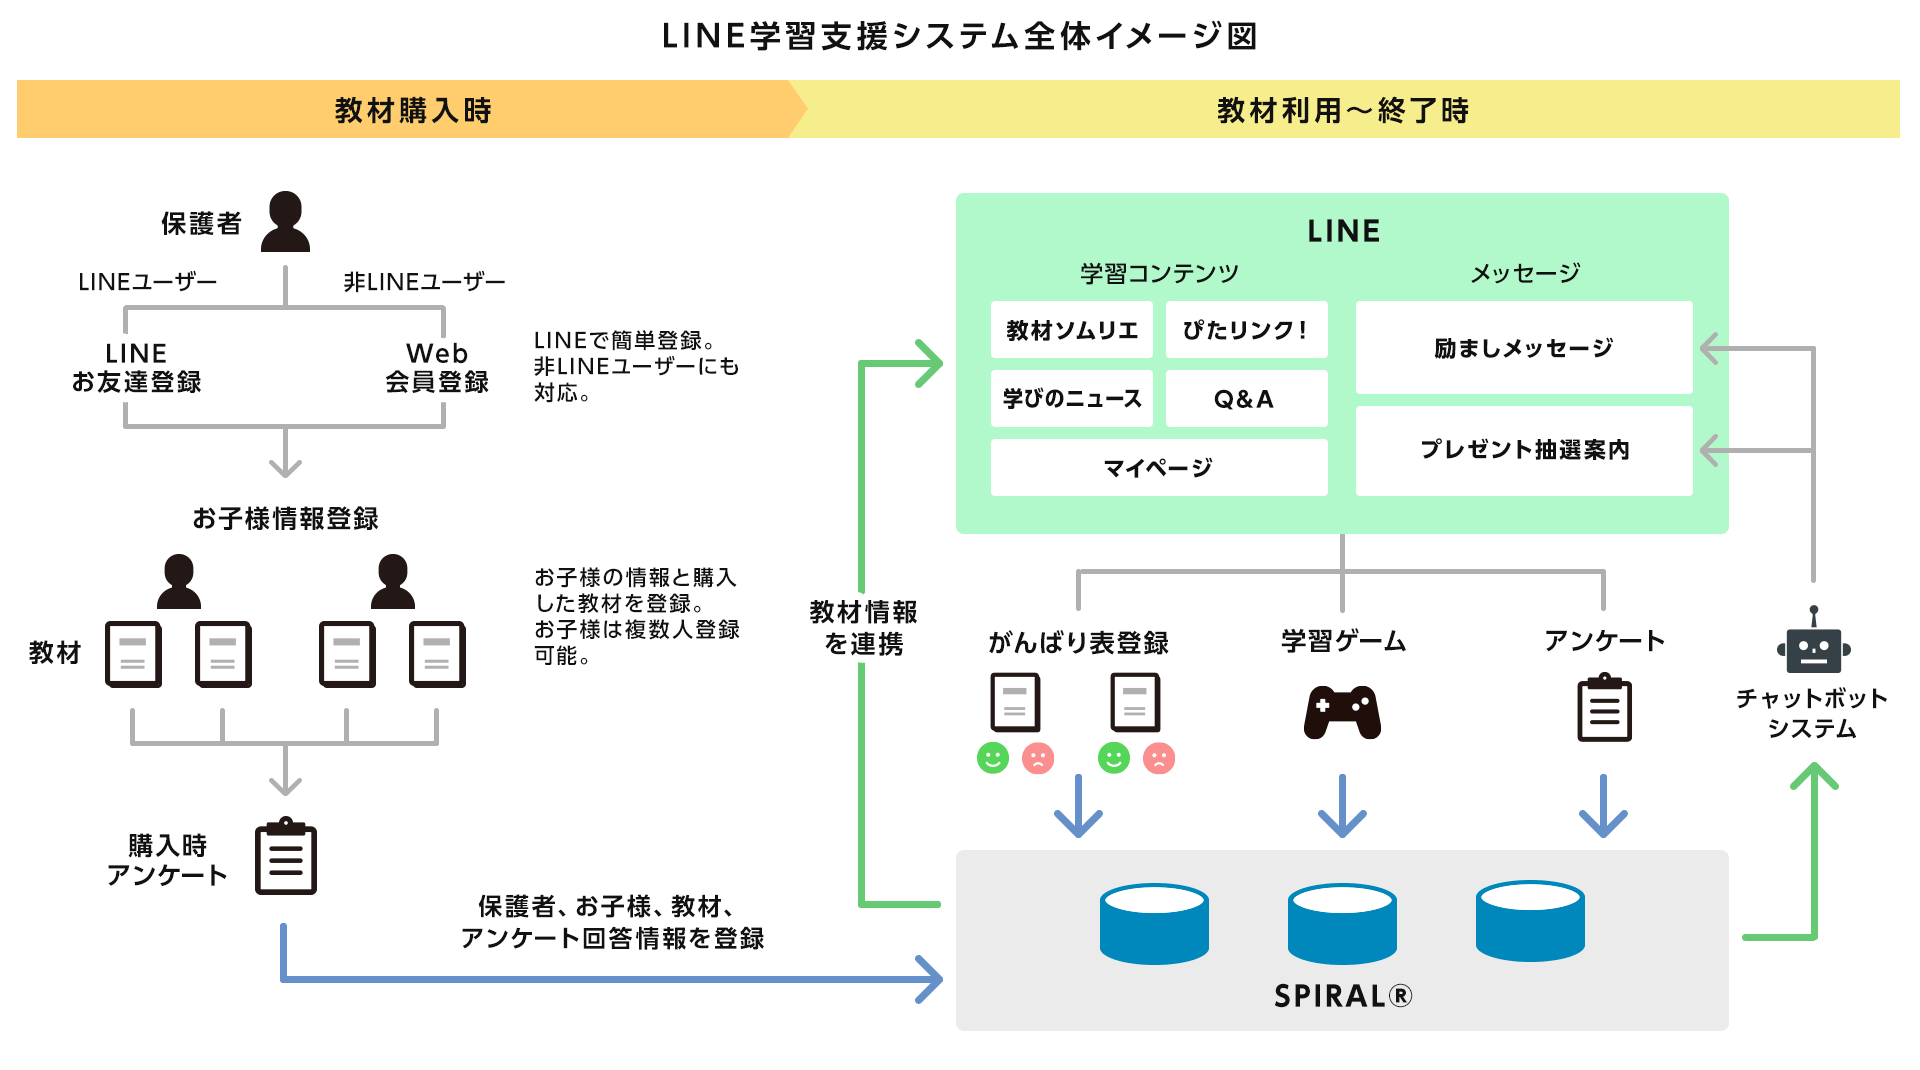 LINE学習支援システム全体イメージ図